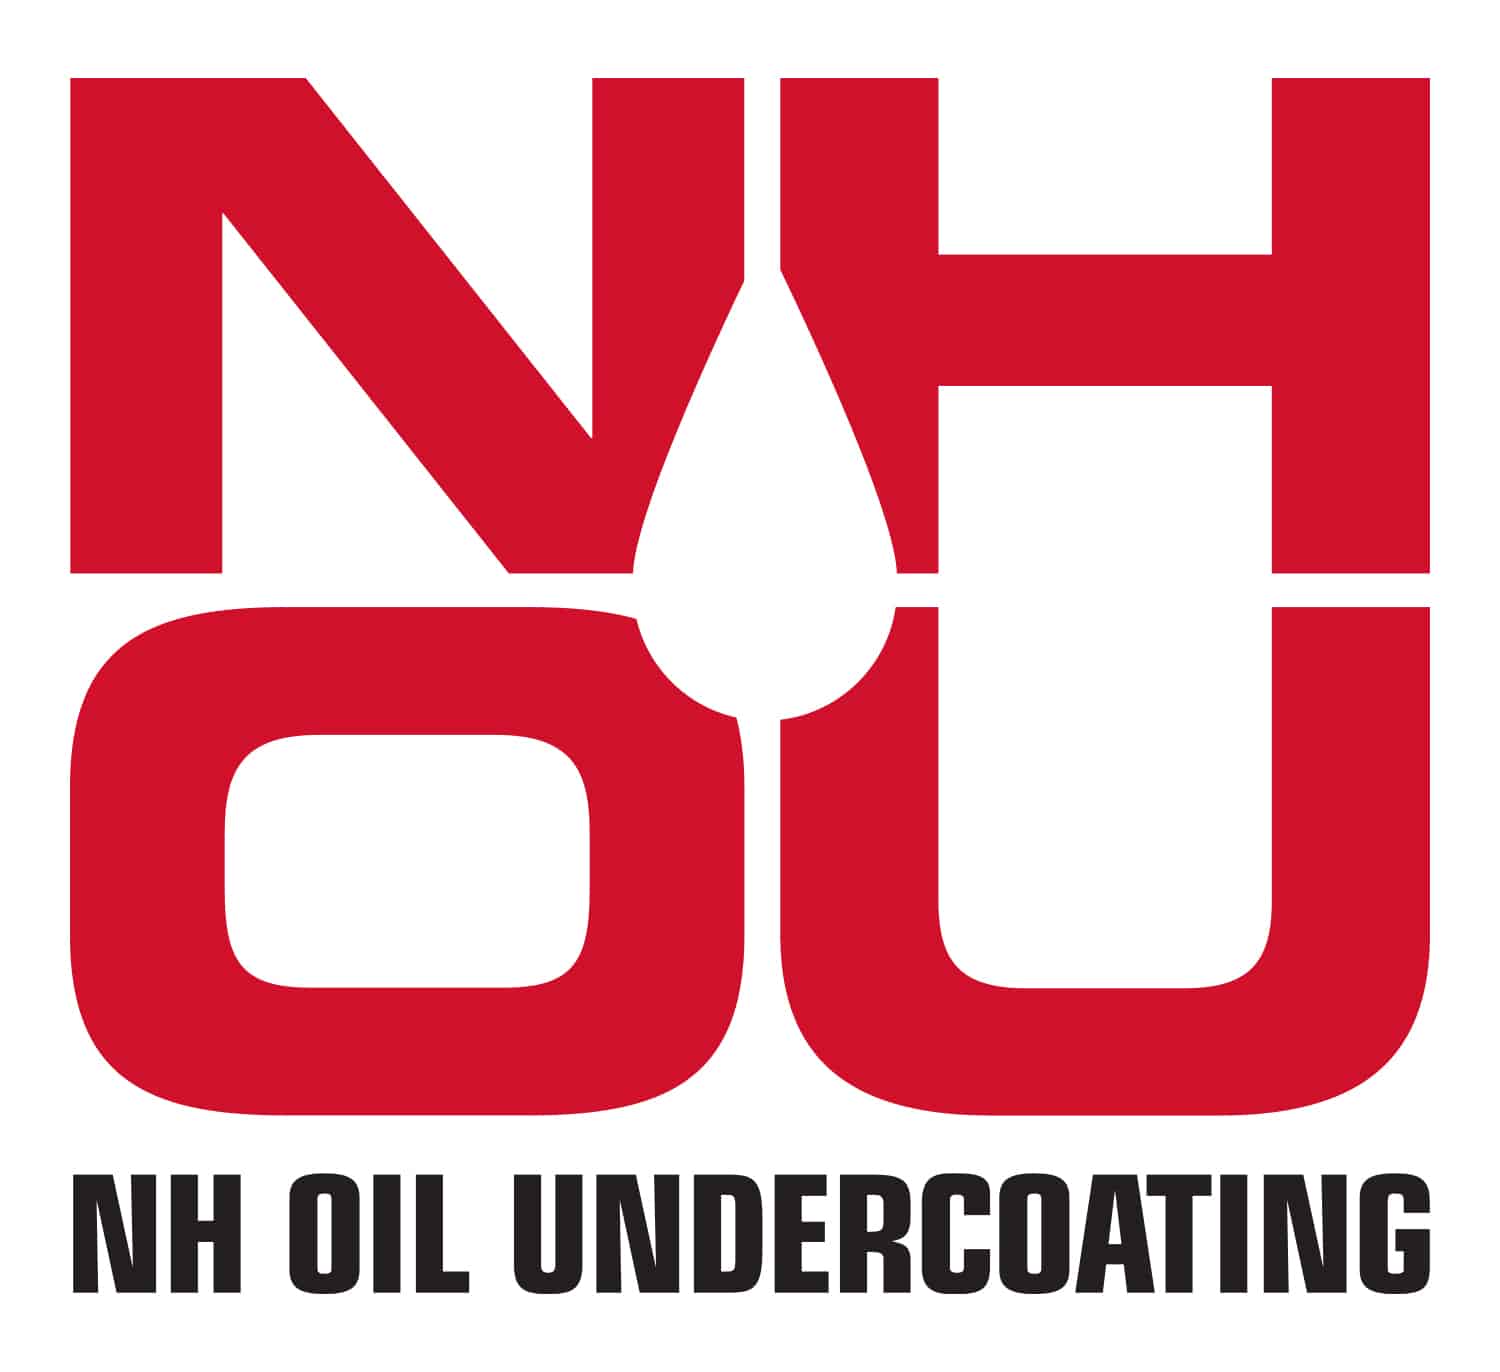 NH Oil Undercoating DIY Kits